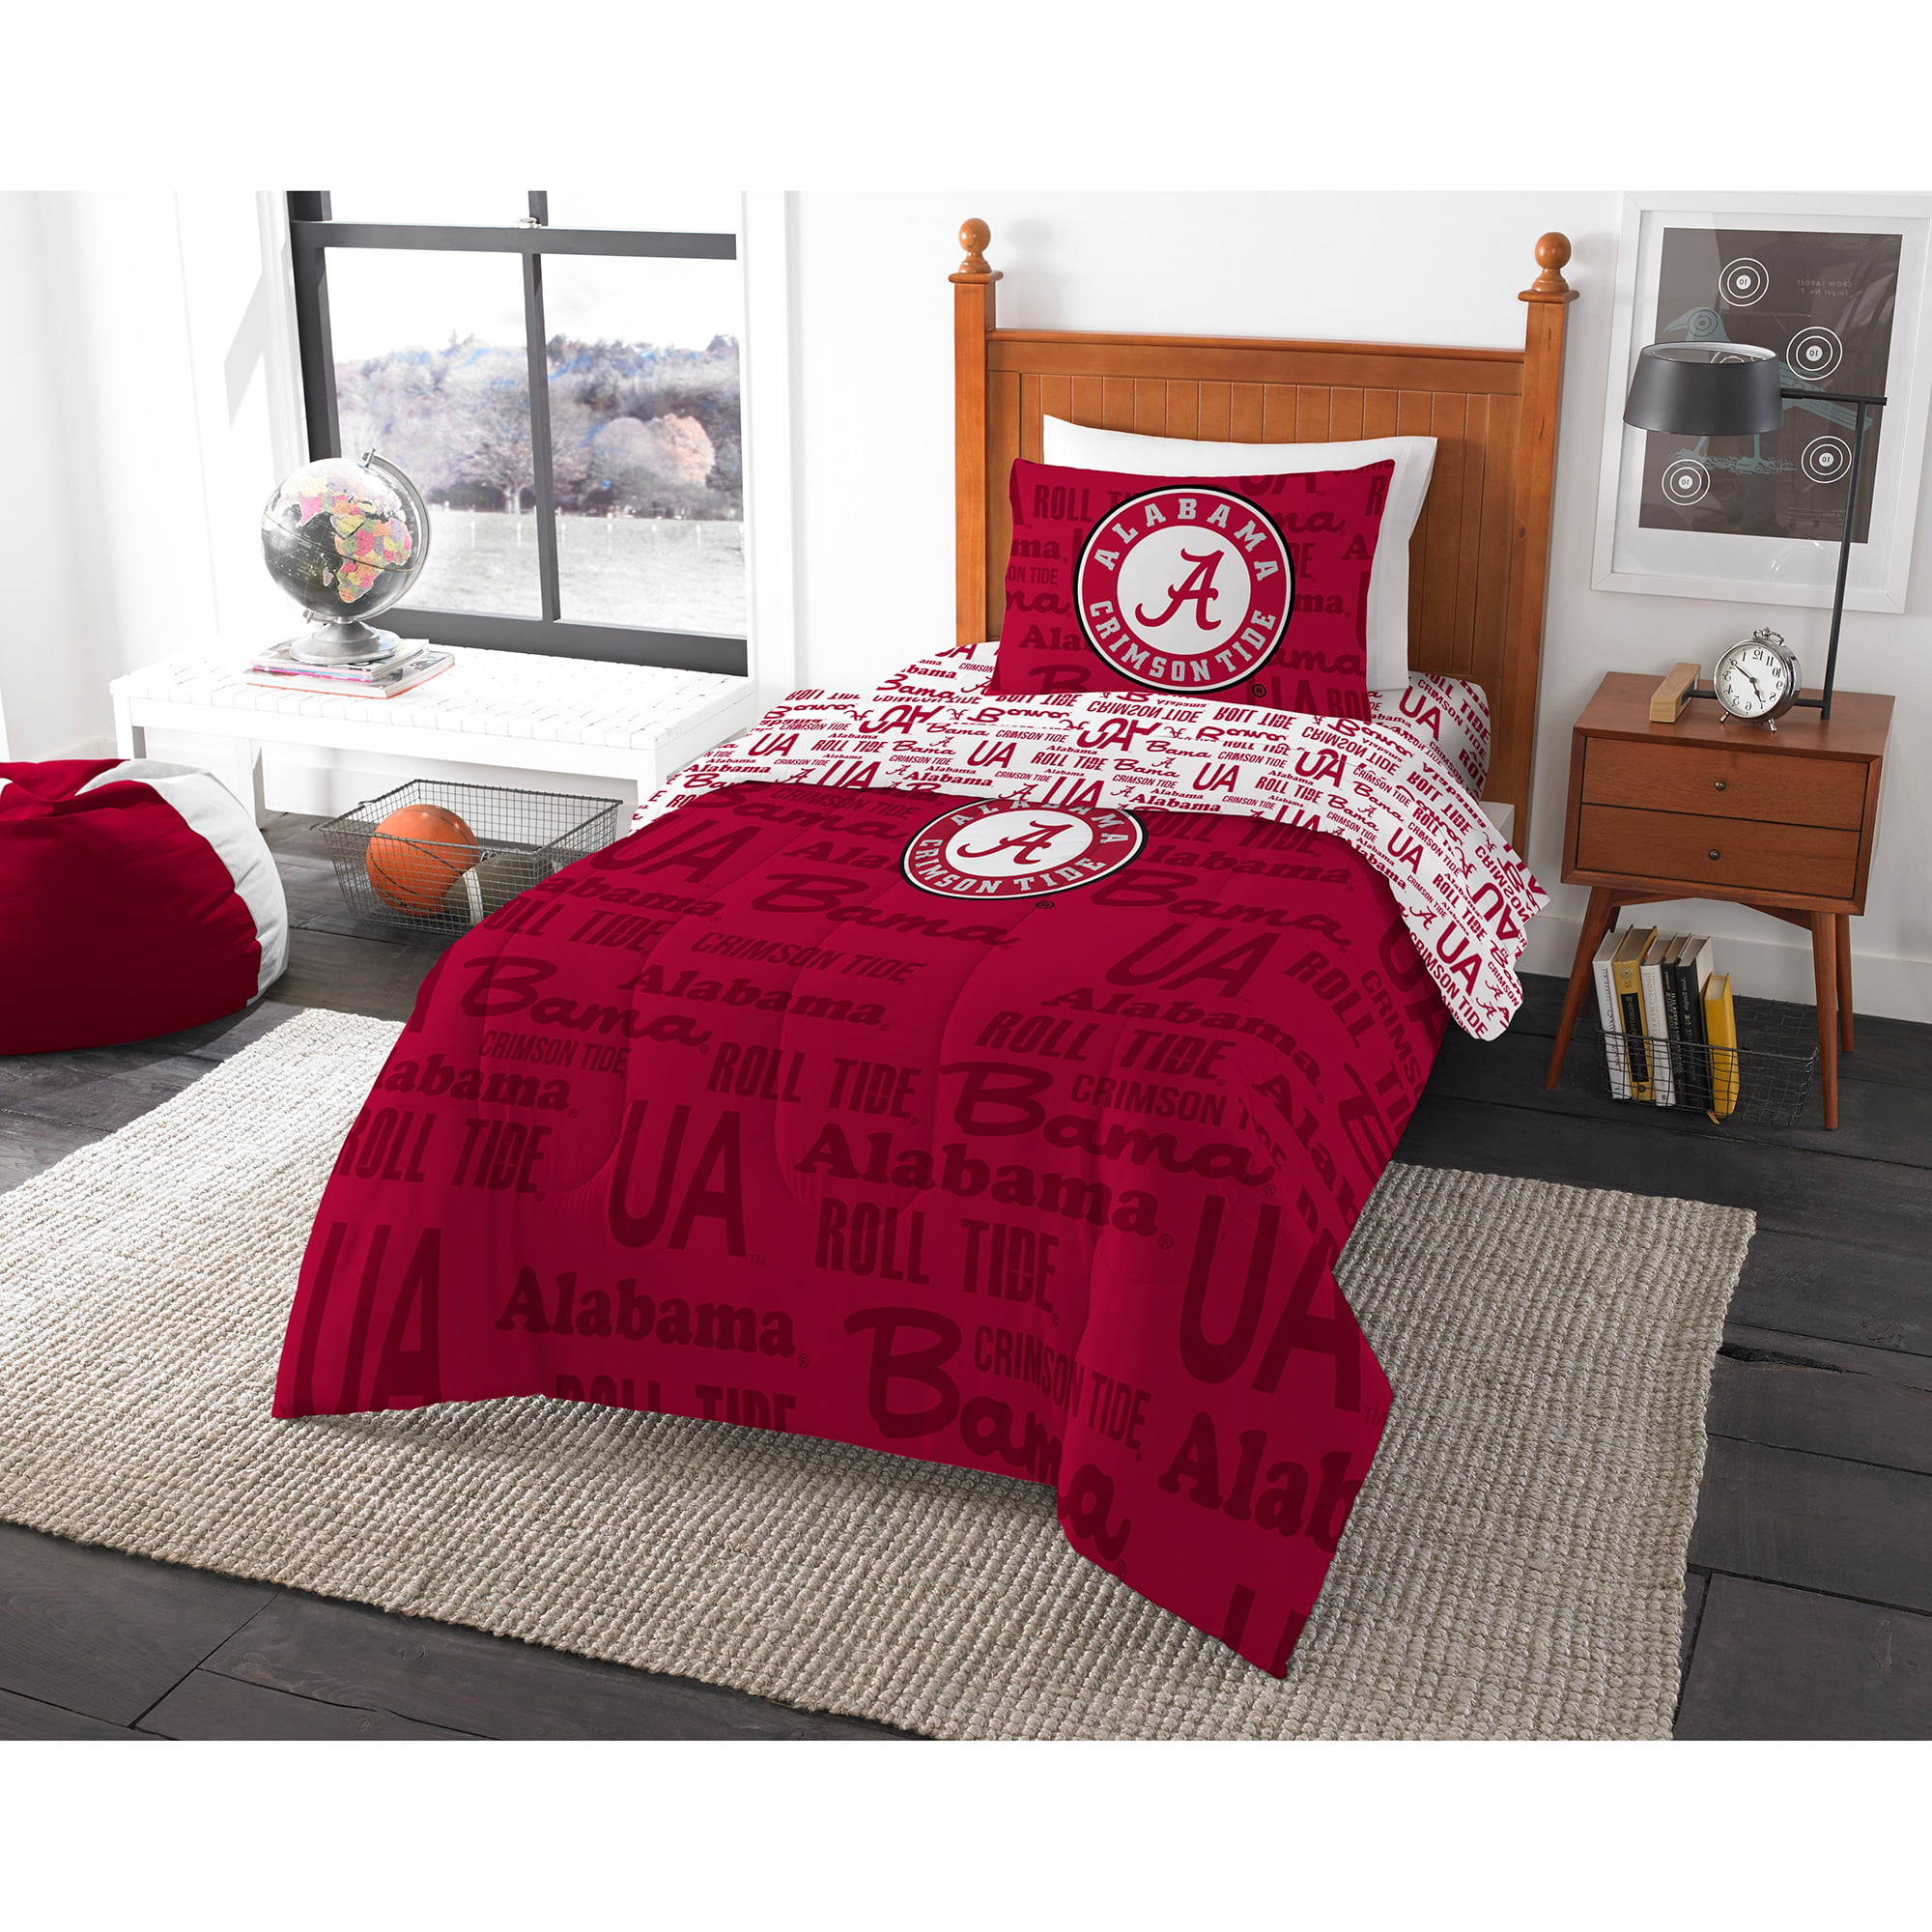 Alabama Crimson Tide Twin Bed In, Alabama King Size Bed Set